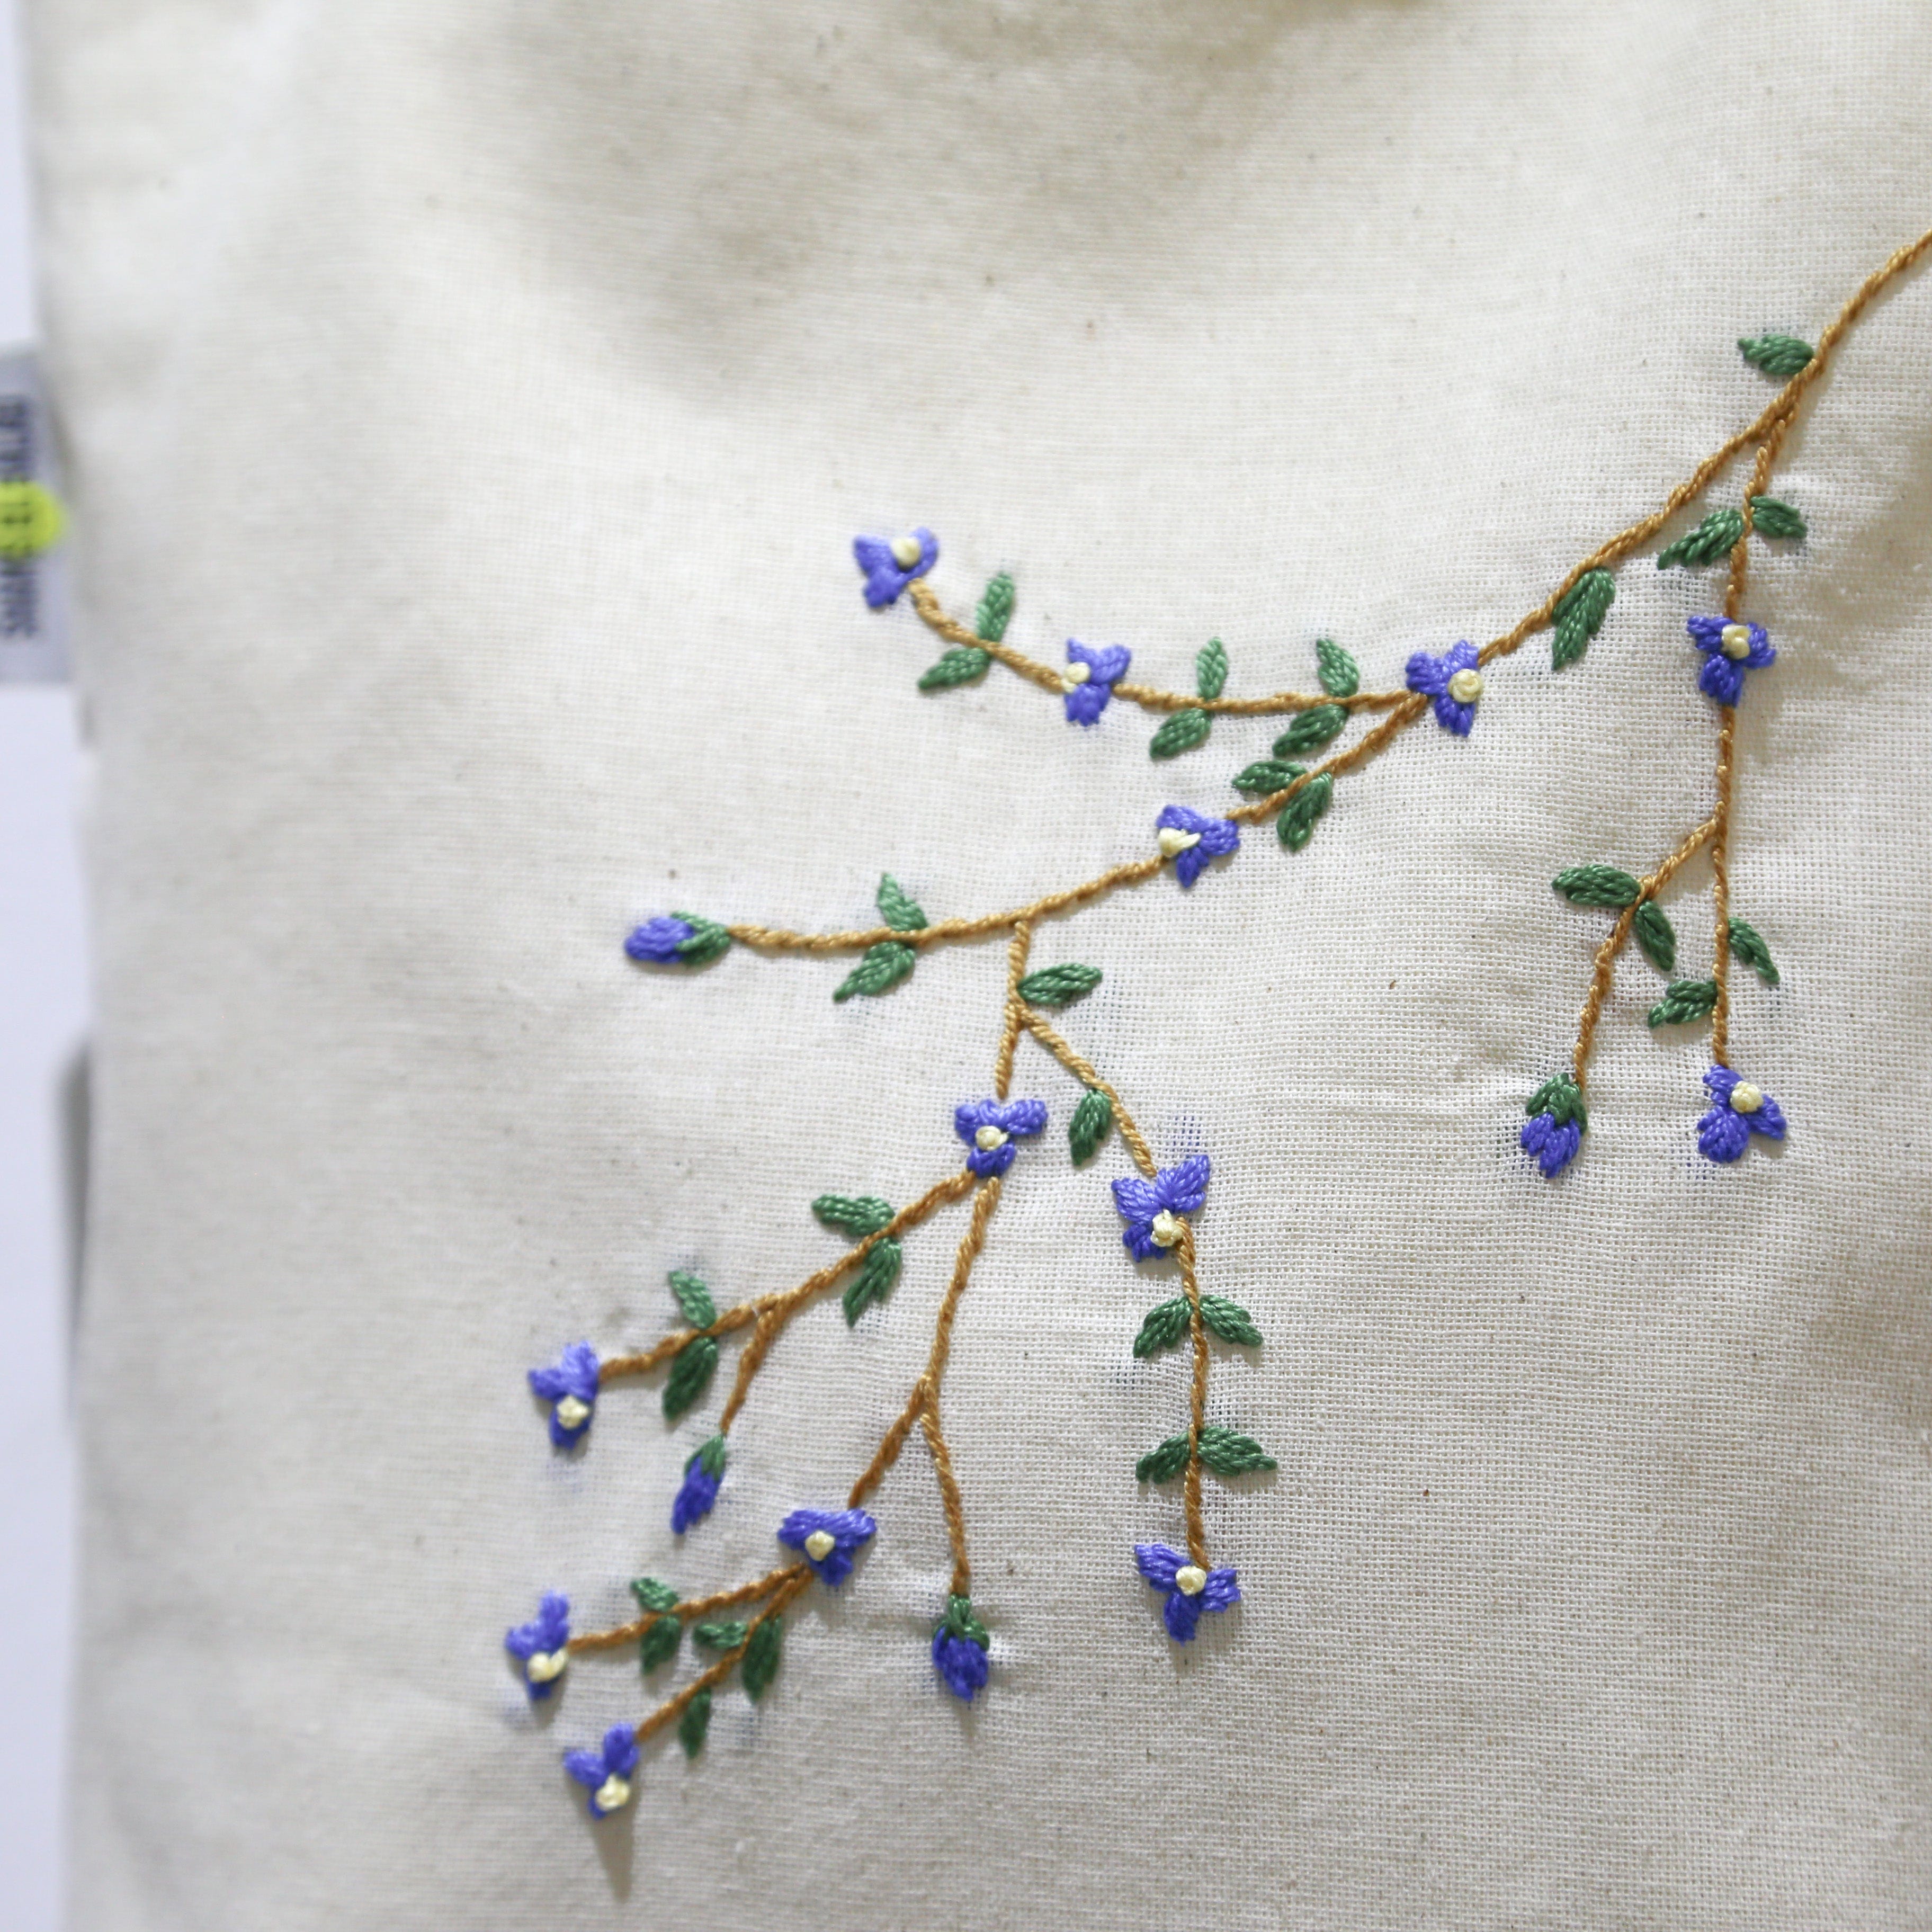 Shams El Balad Tote bag Blue Hanging flowers Embroidered Tote Bag